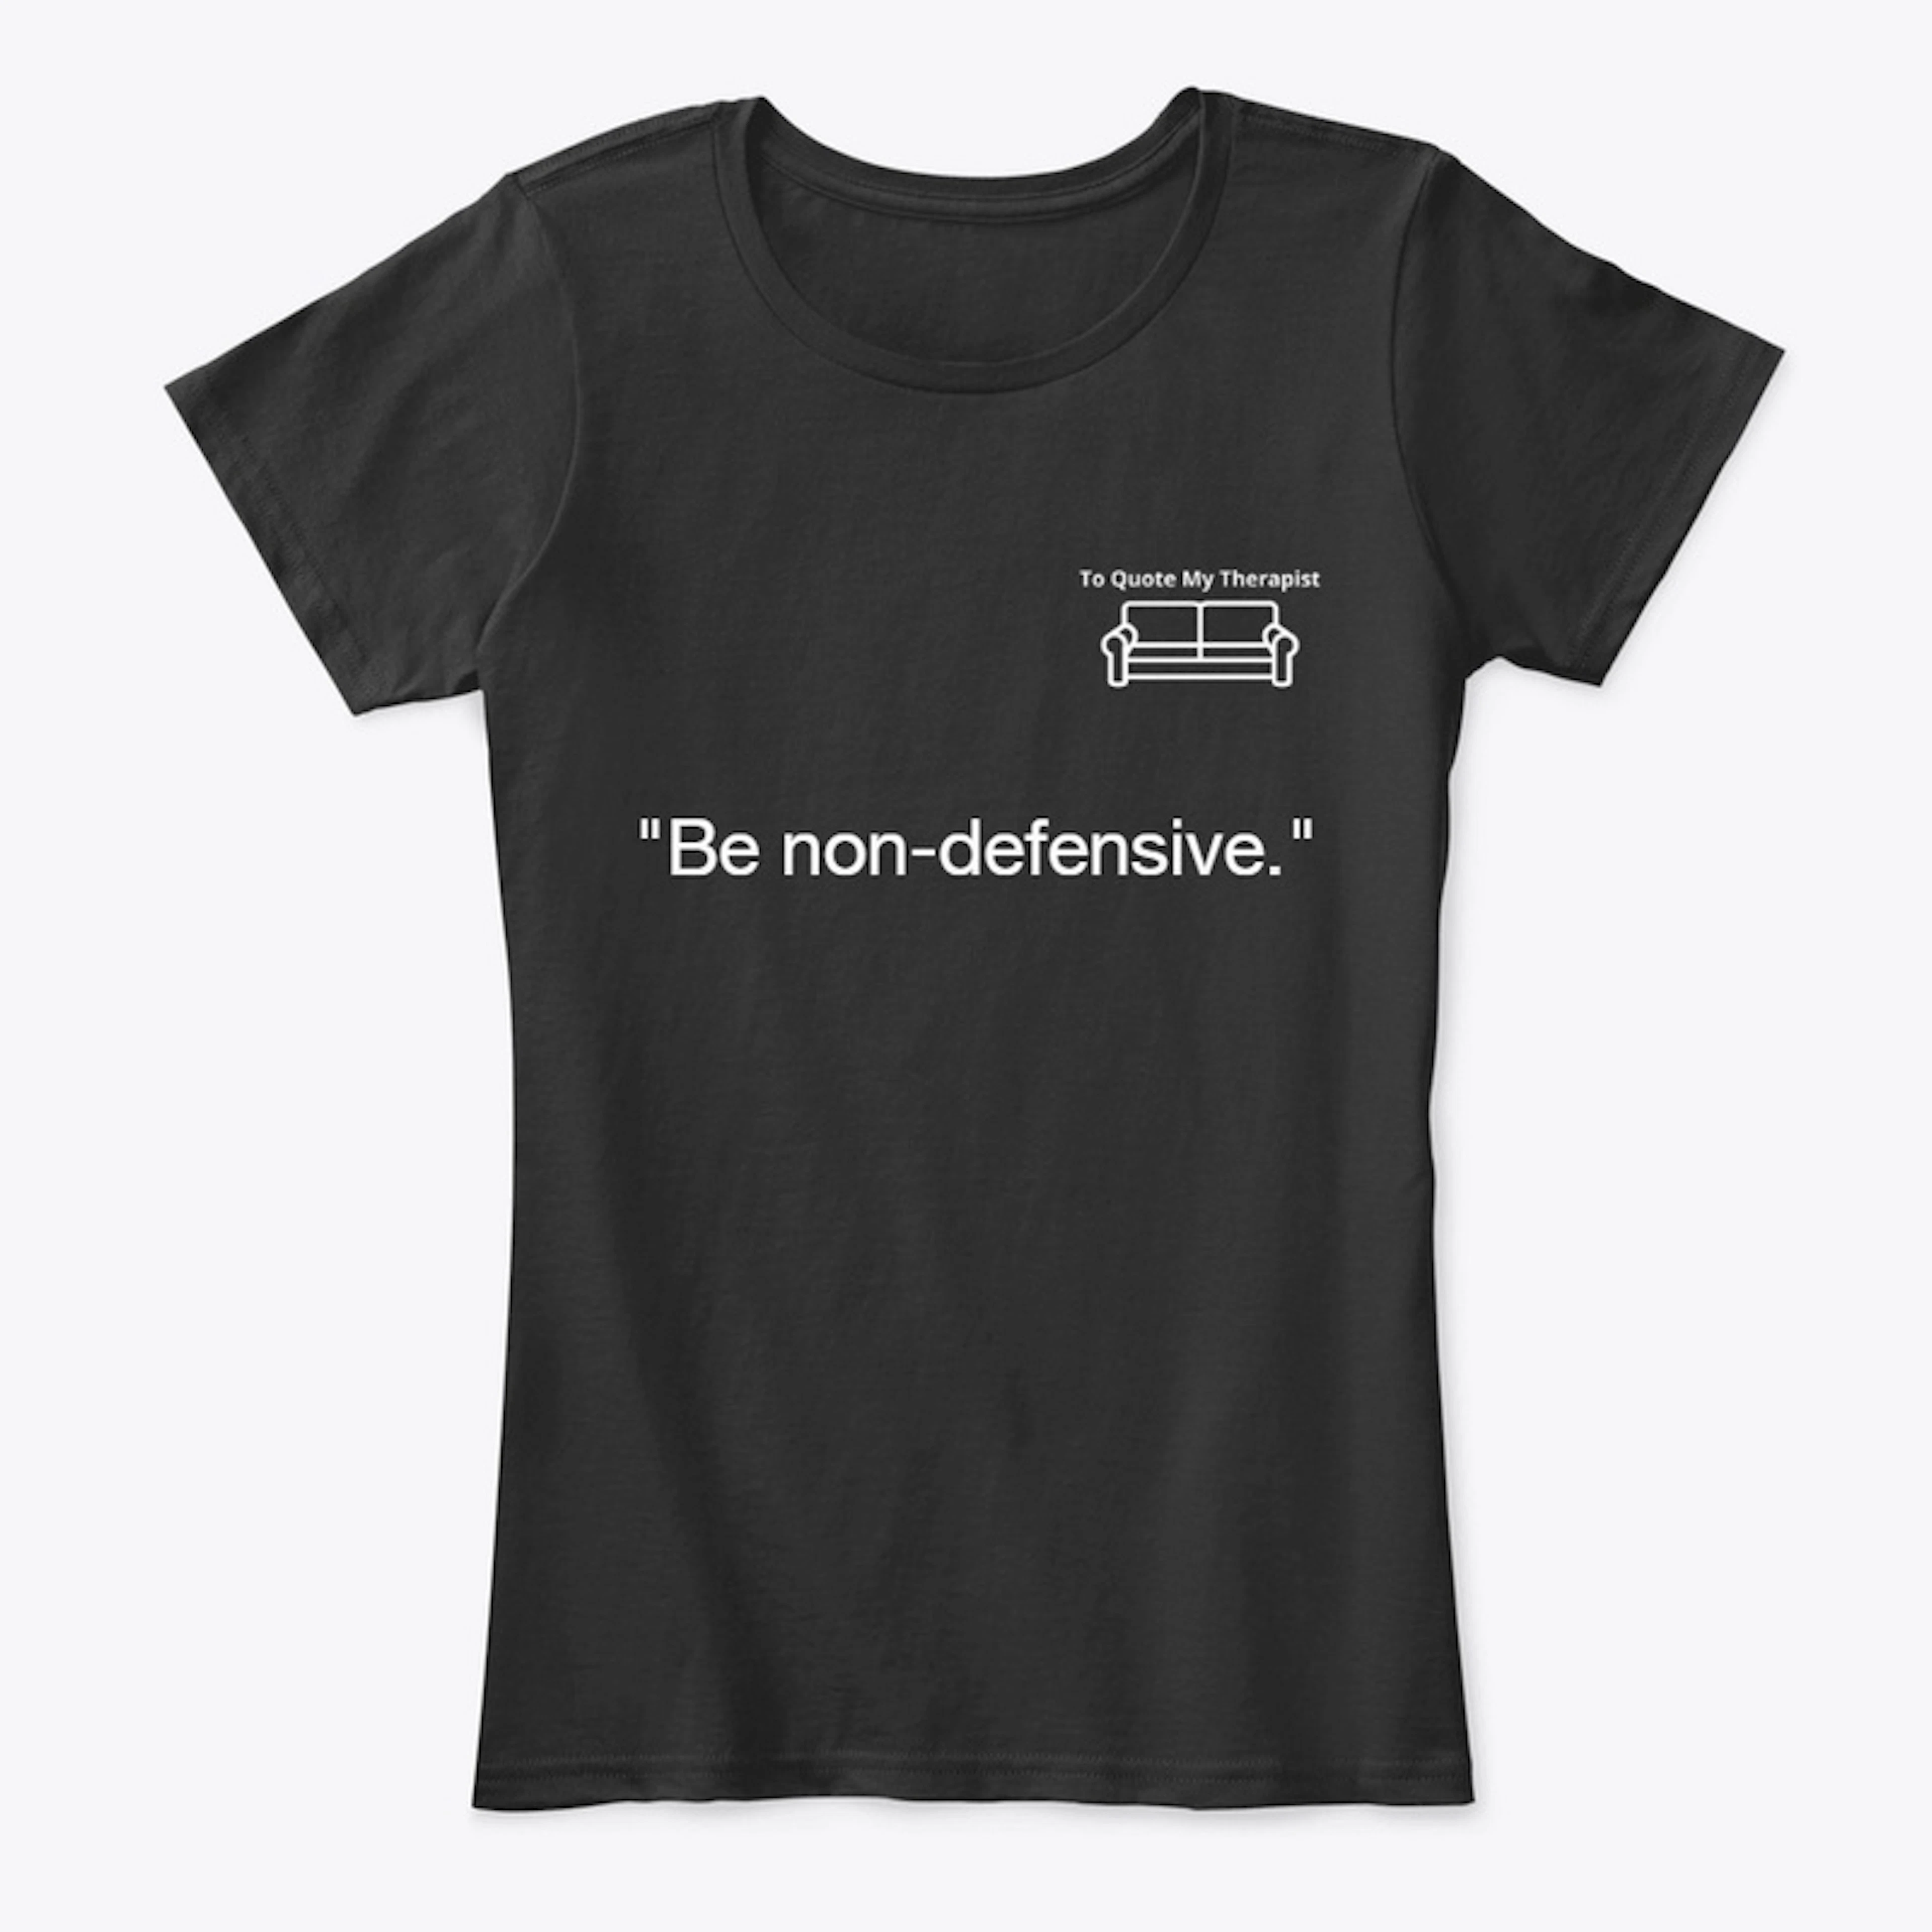 TQMT - "Be non-defensive."